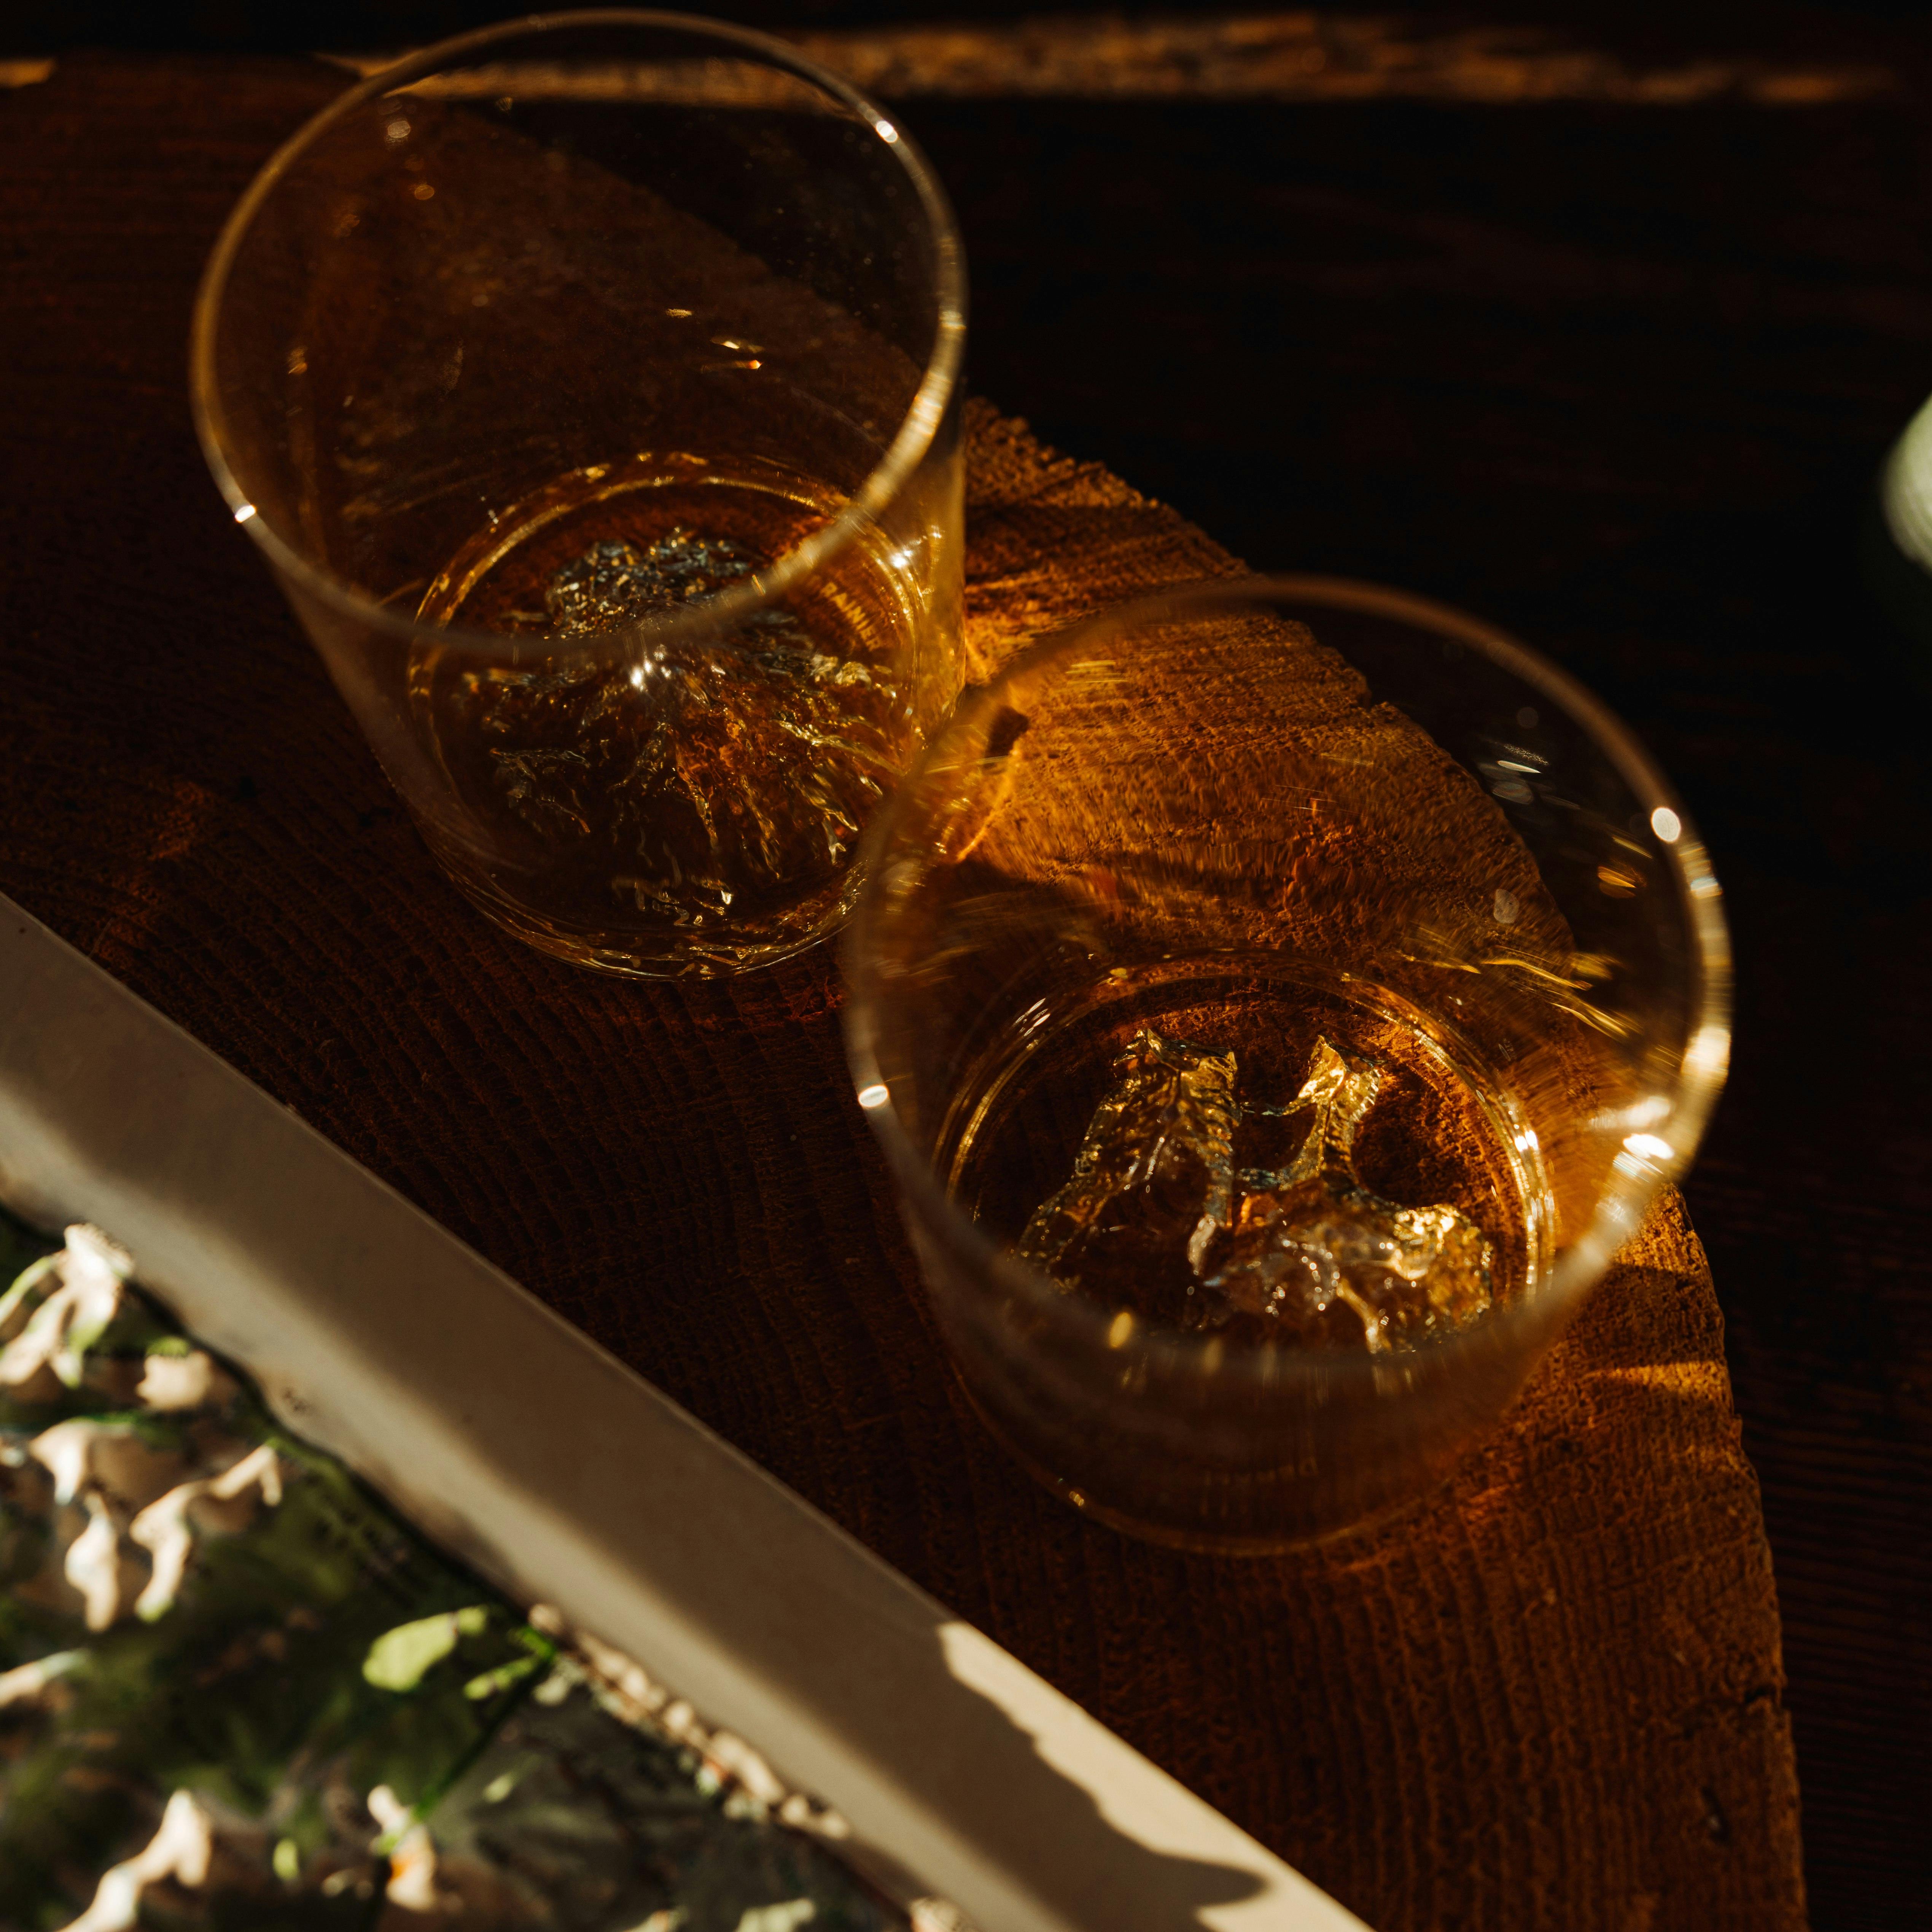 Luxury Peaks Whiskey Glasses Set/2 - Creative Kitchen Fargo